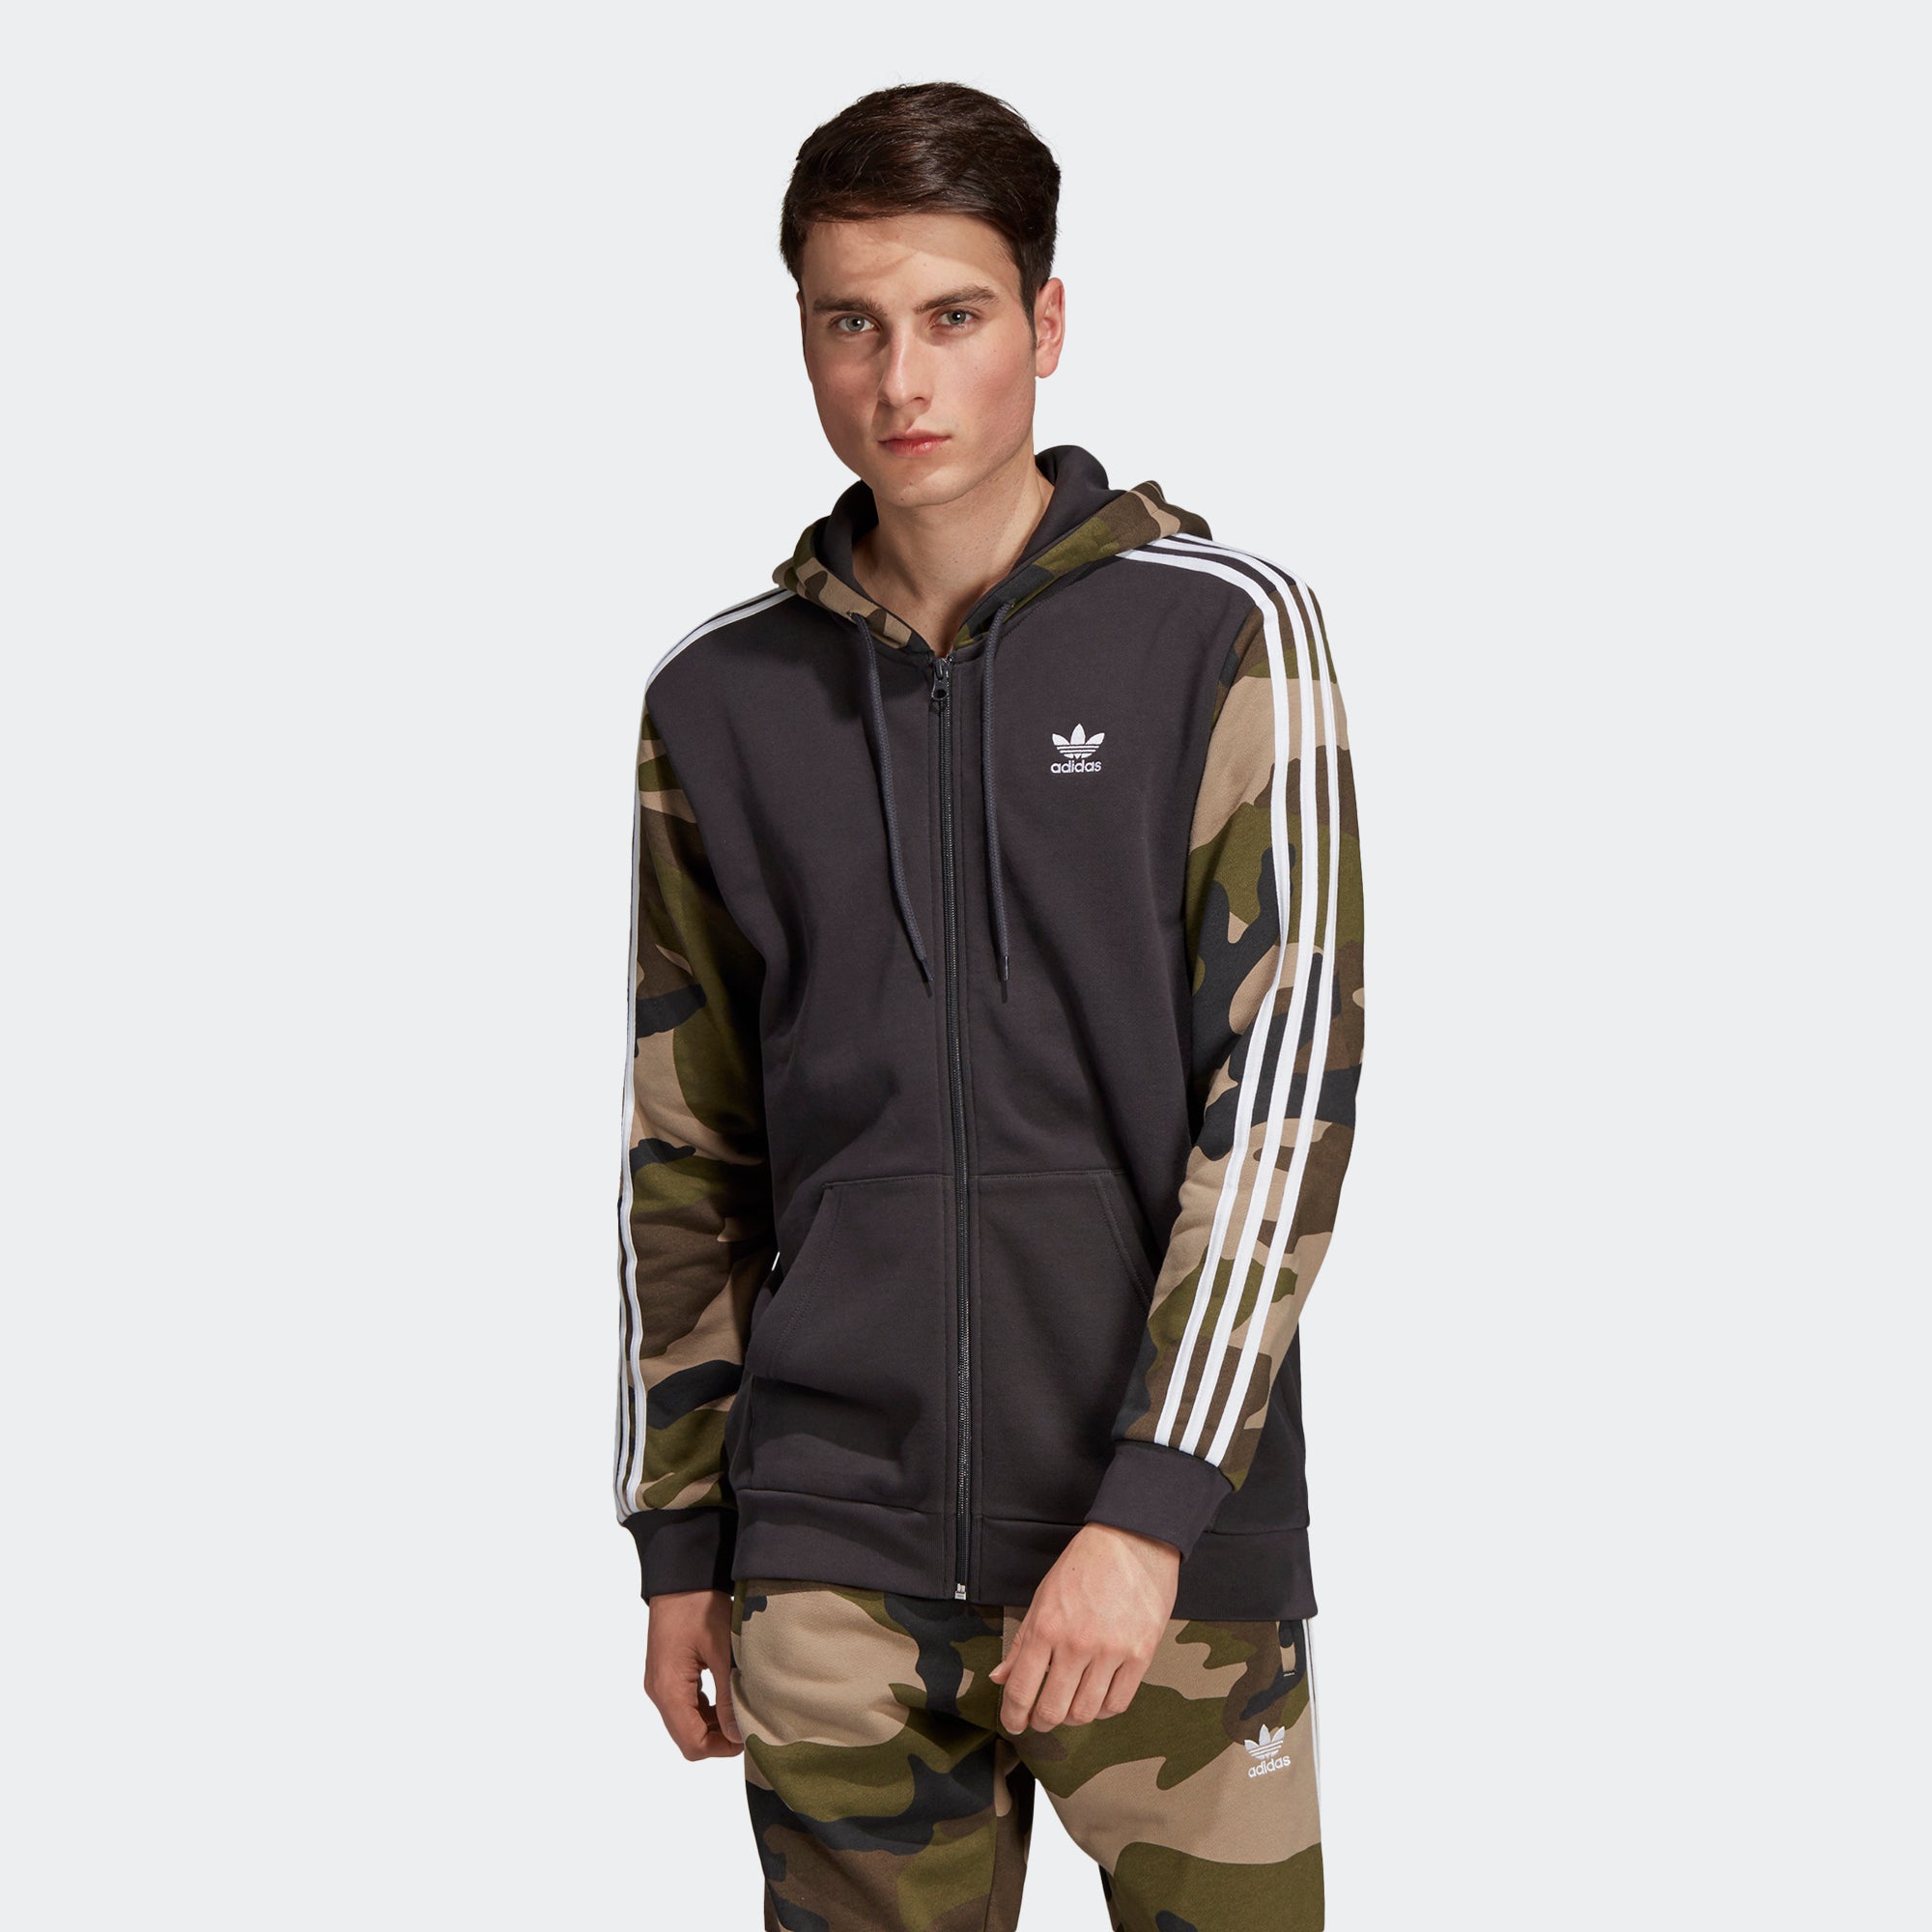 men's adidas originals camouflage hoodie